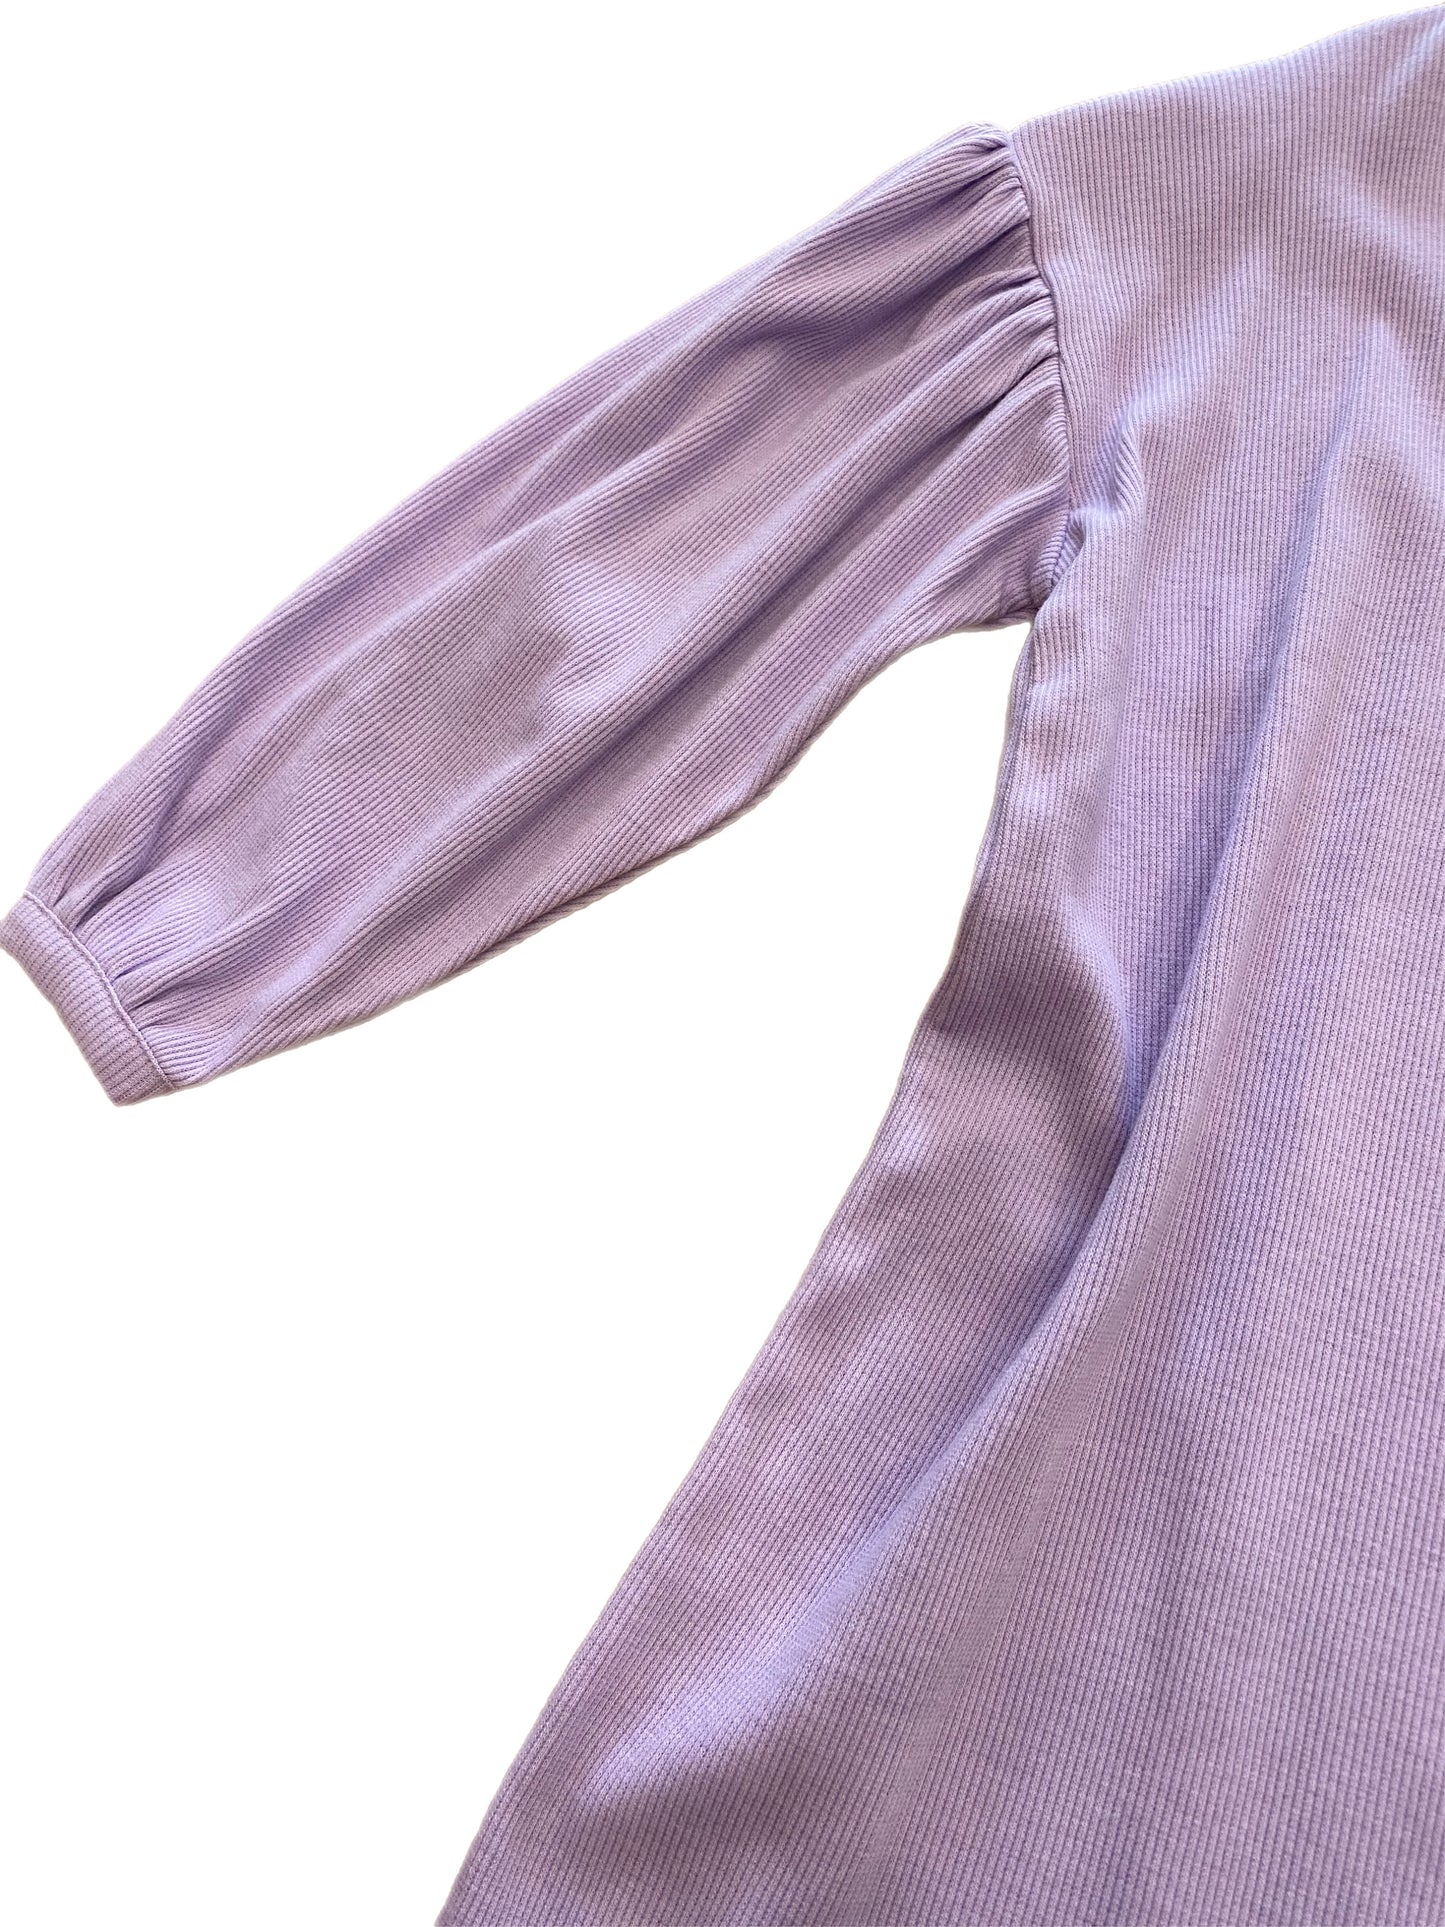 Lavender Puff Sleeve Tee shirt Dress (Size 5 years)